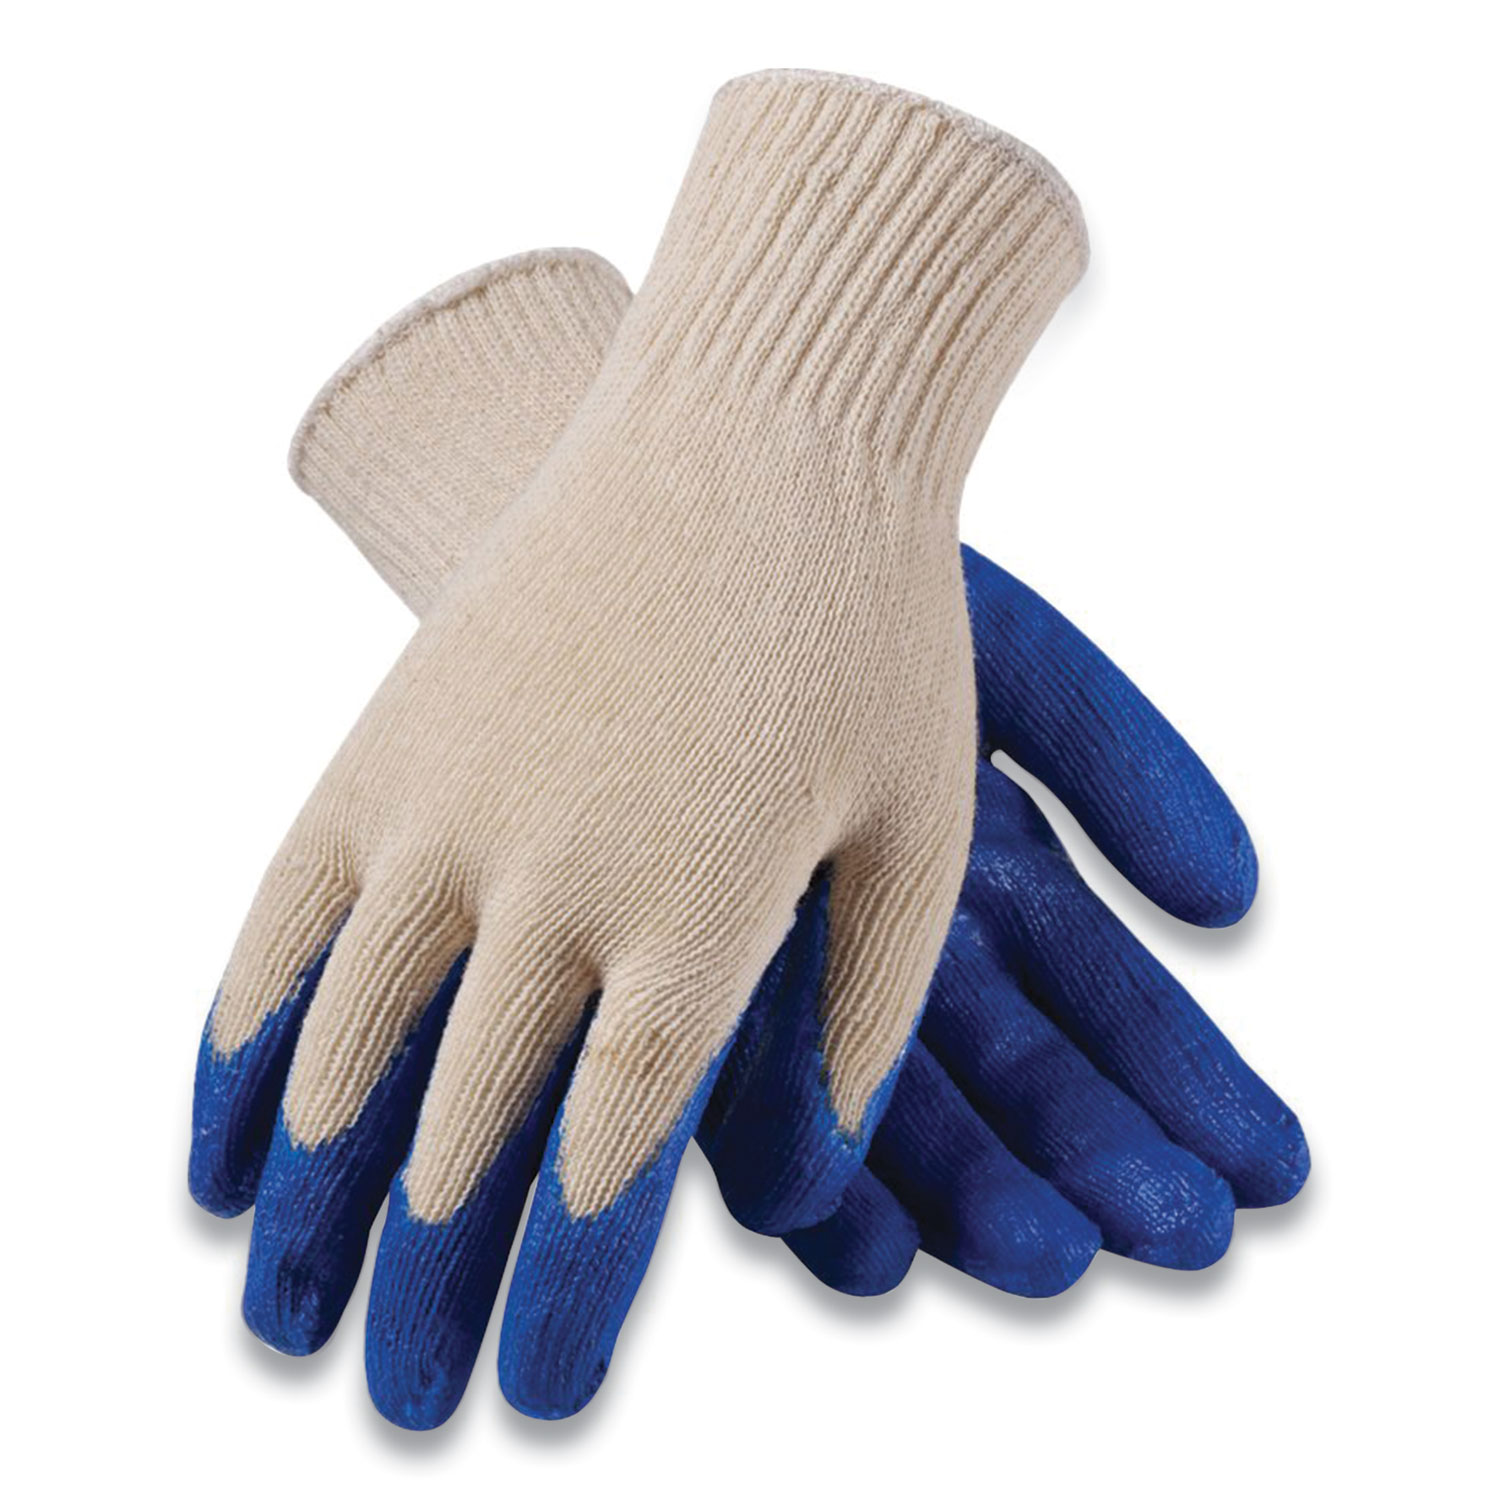 PIP Seamless Knit Cotton/Polyester Gloves, Regular Grade, Large, White/Blue, 12 Pairs